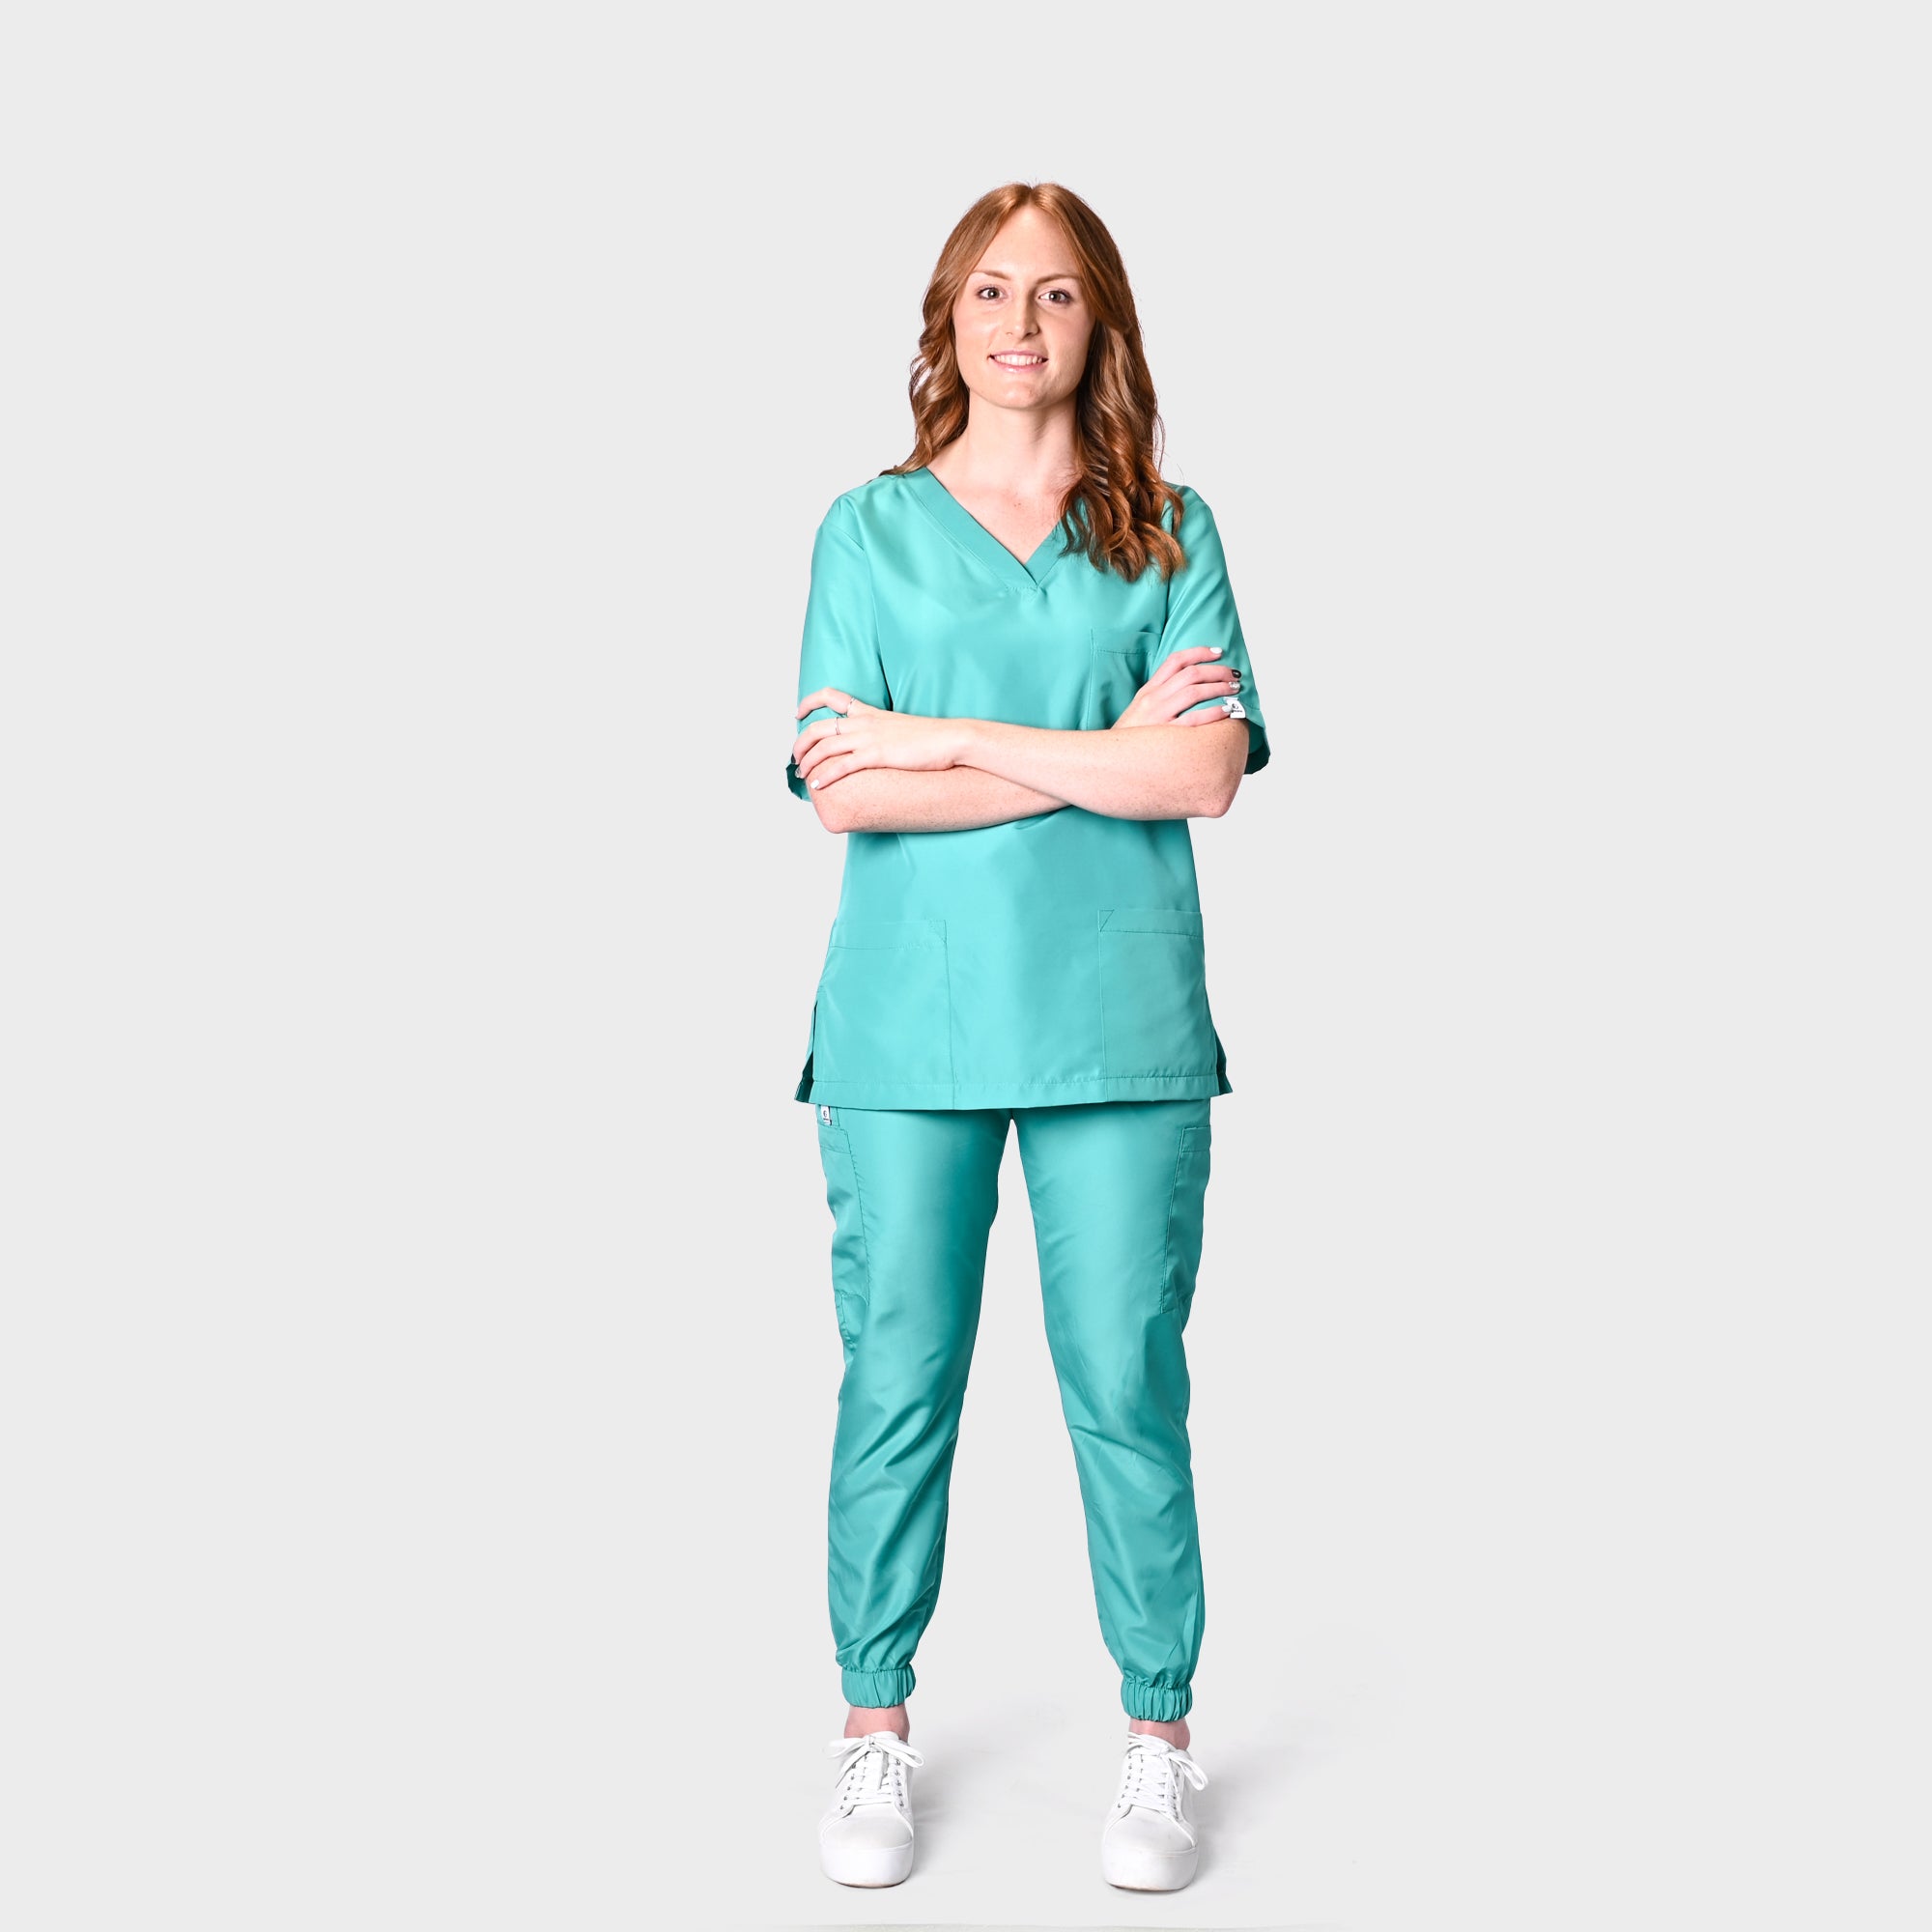 LADIES ACTIVE AR V-NECK TOP - Greens Medi Scrubs South Africa - Premium Medical Uniforms & Apparel - Delivery Across SA 